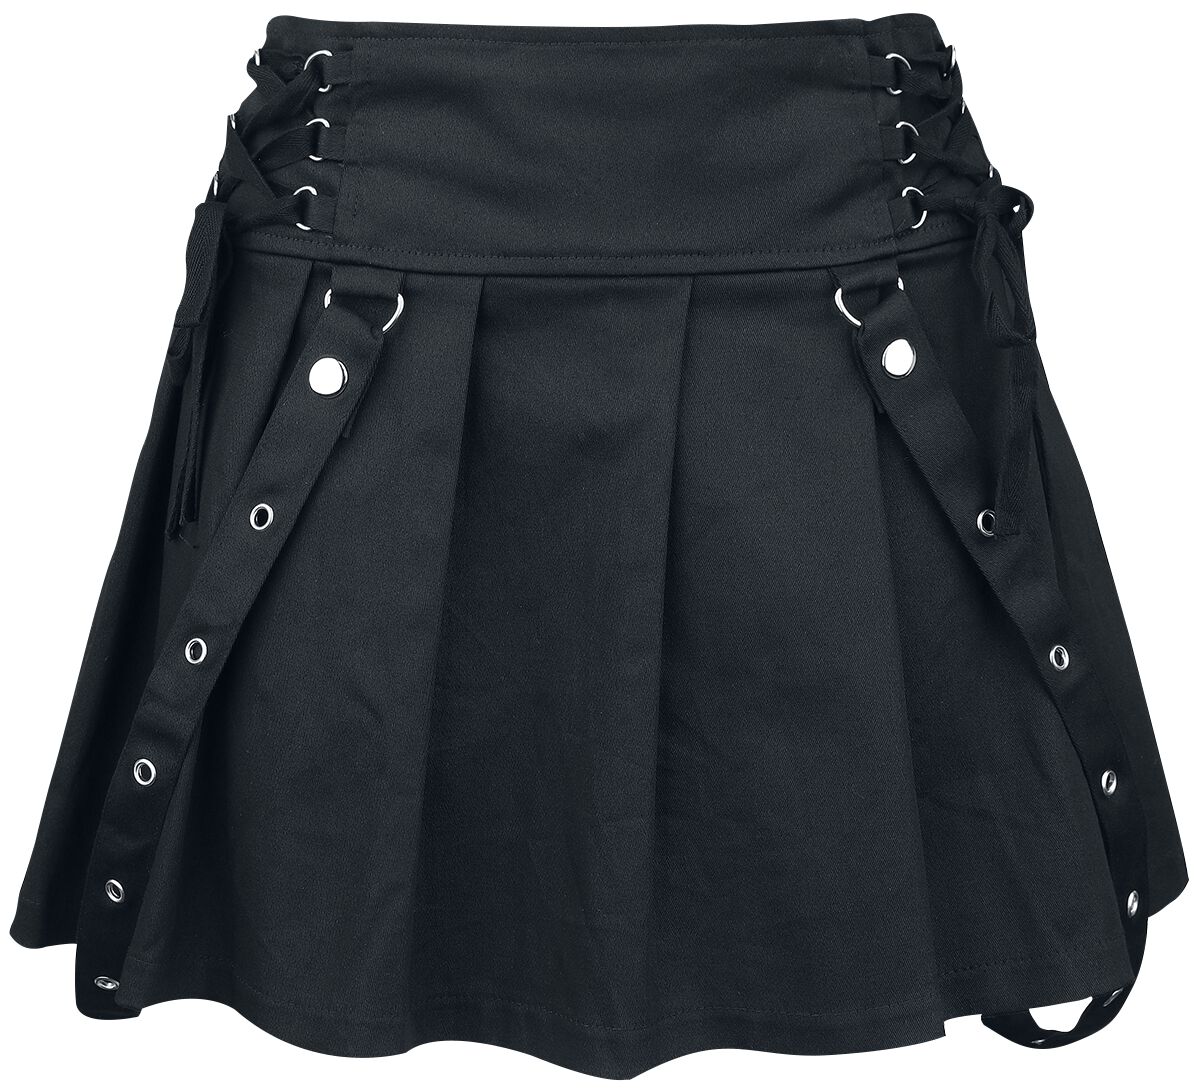 Image of Minigonna Gothic di Poizen Industries - Rebellious skirt - M a XXL - Donna - nero